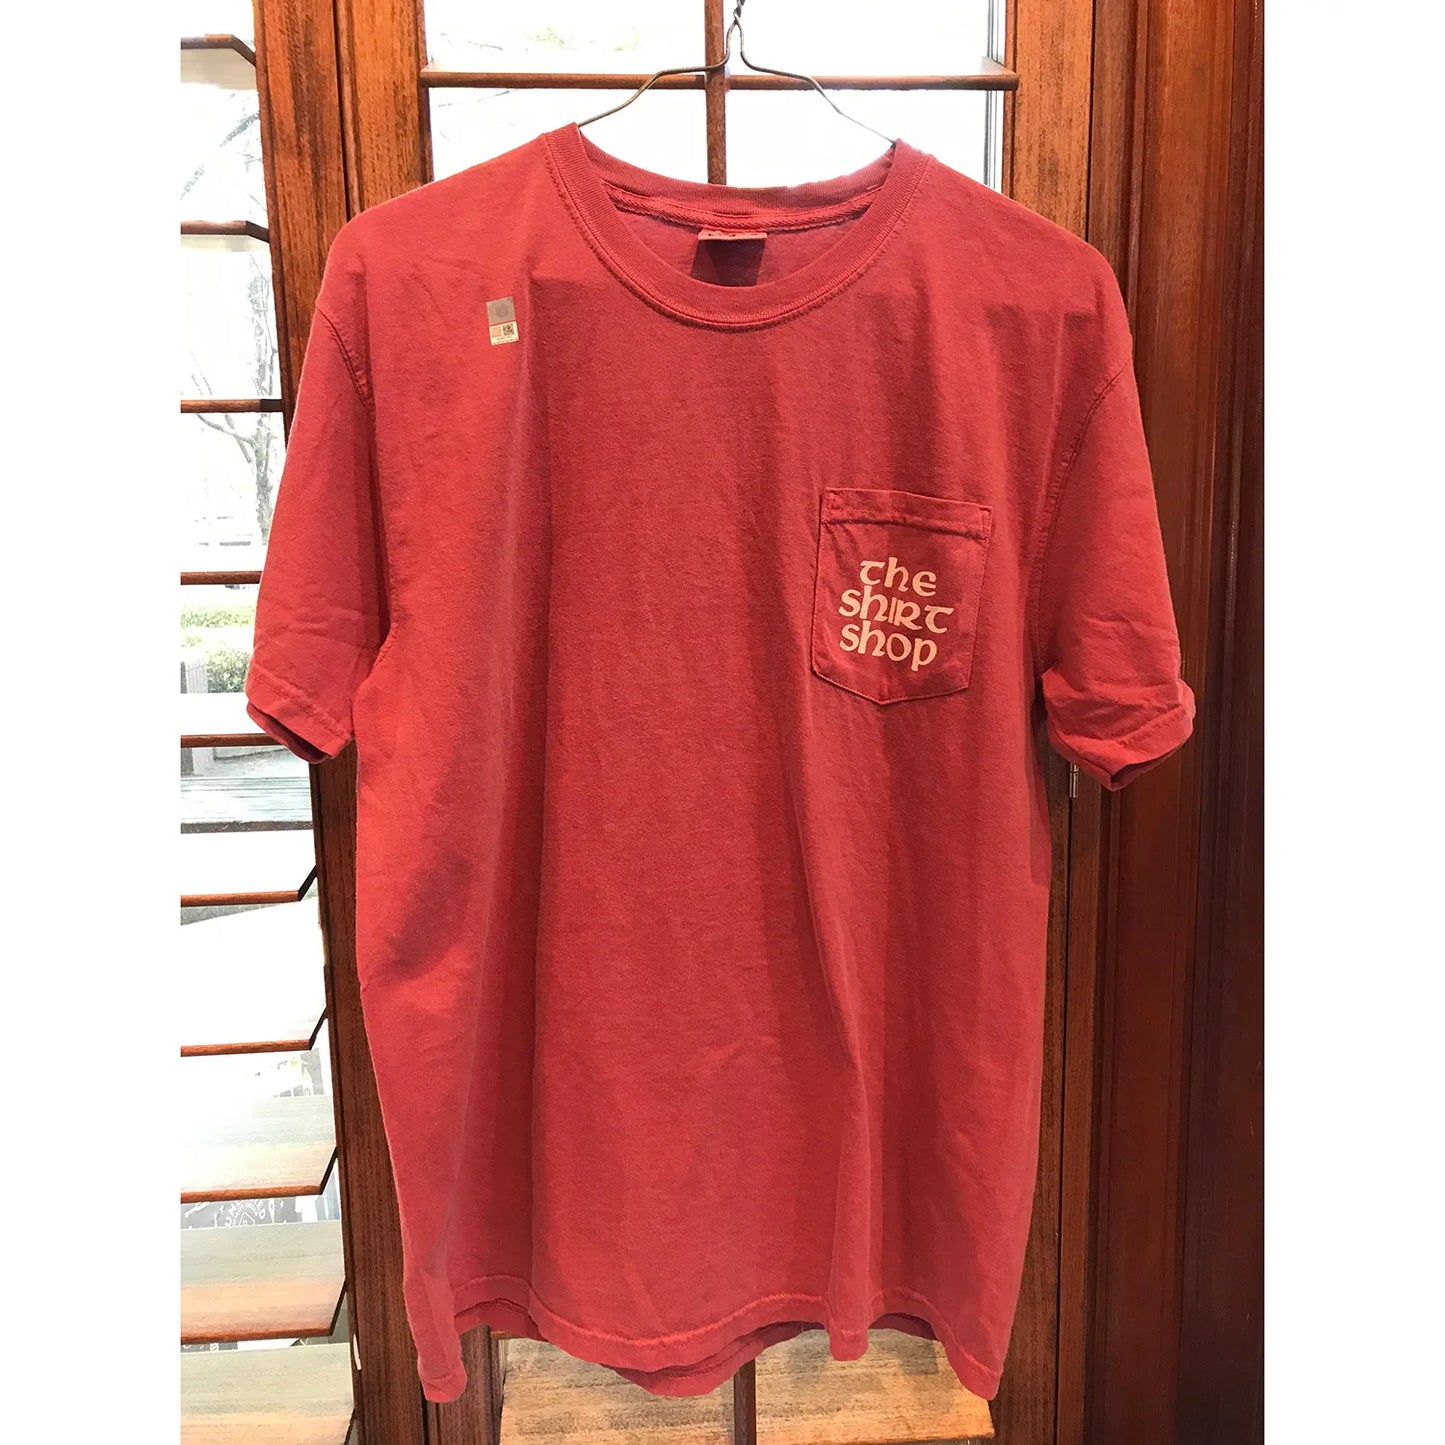 Shirt Shop T-Shirt - Denny Chimes